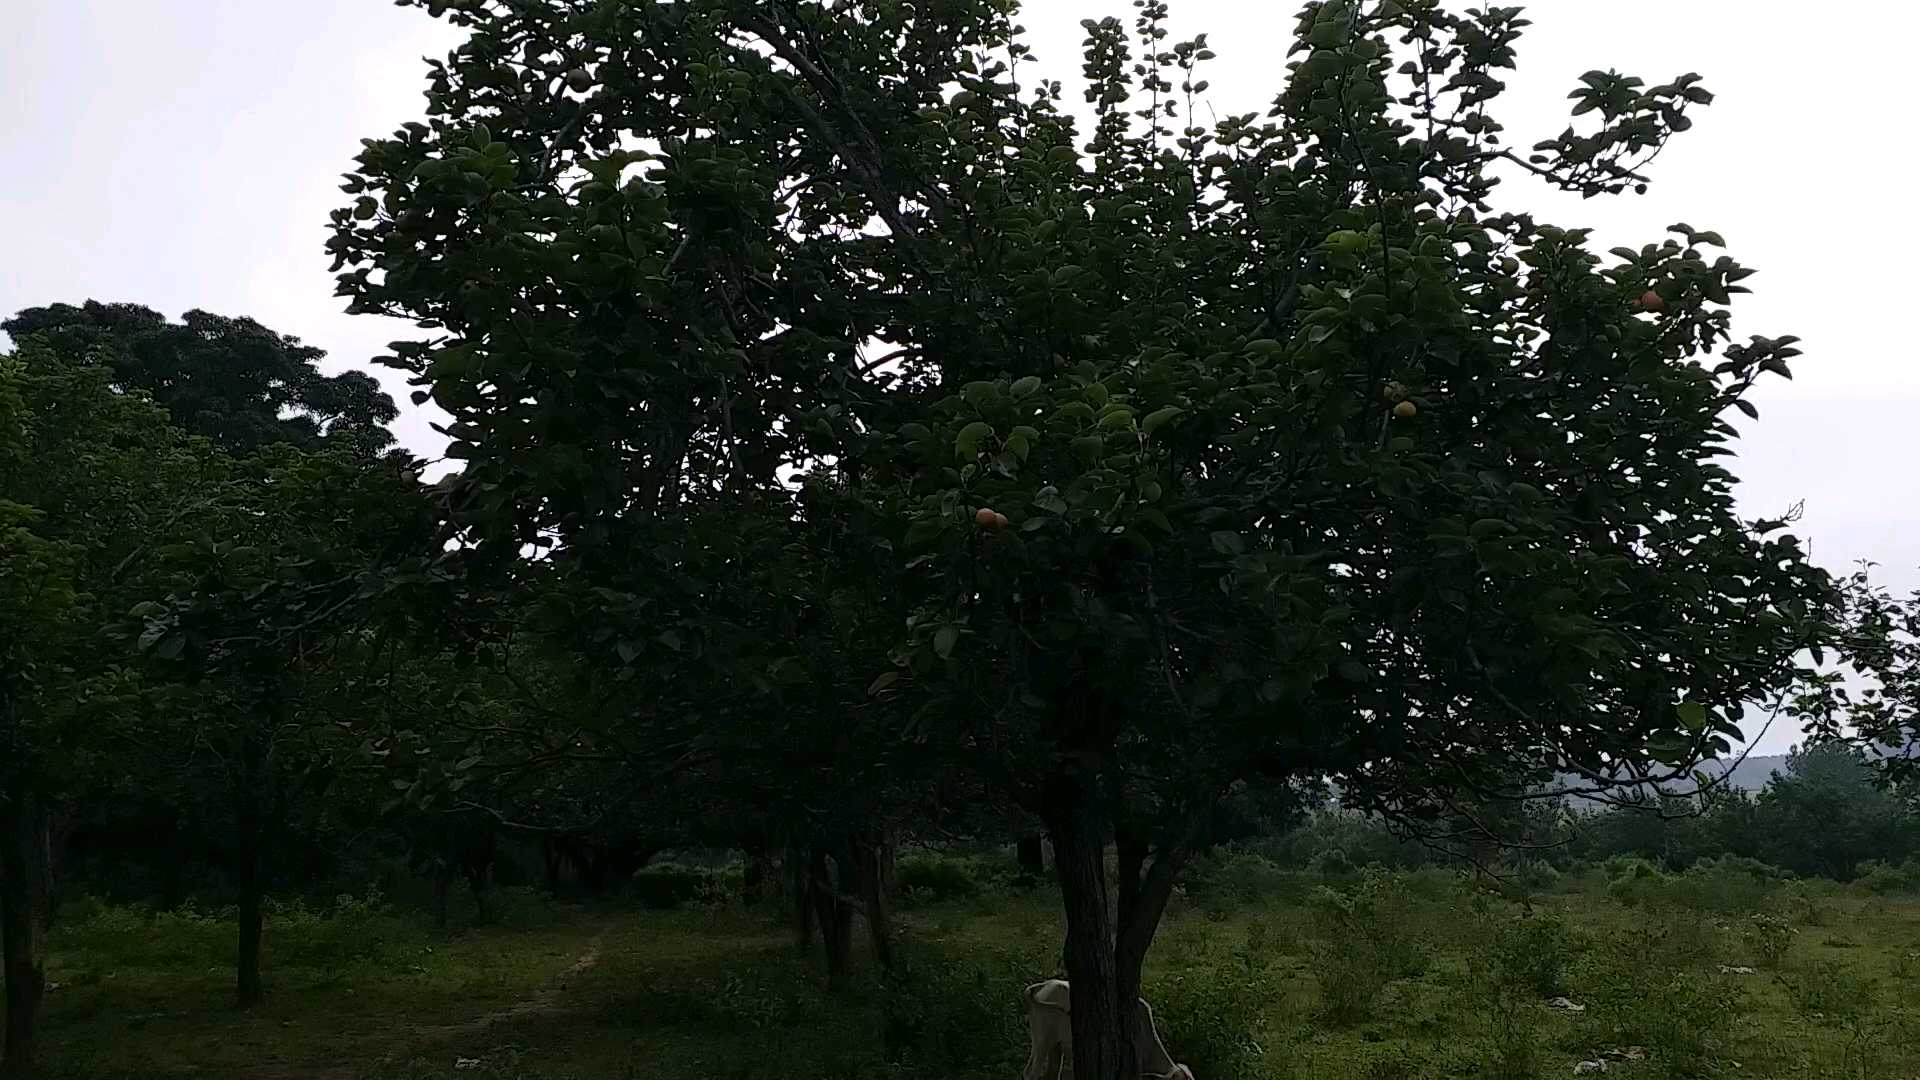 Pear cultivation at Netarhat in Latehar